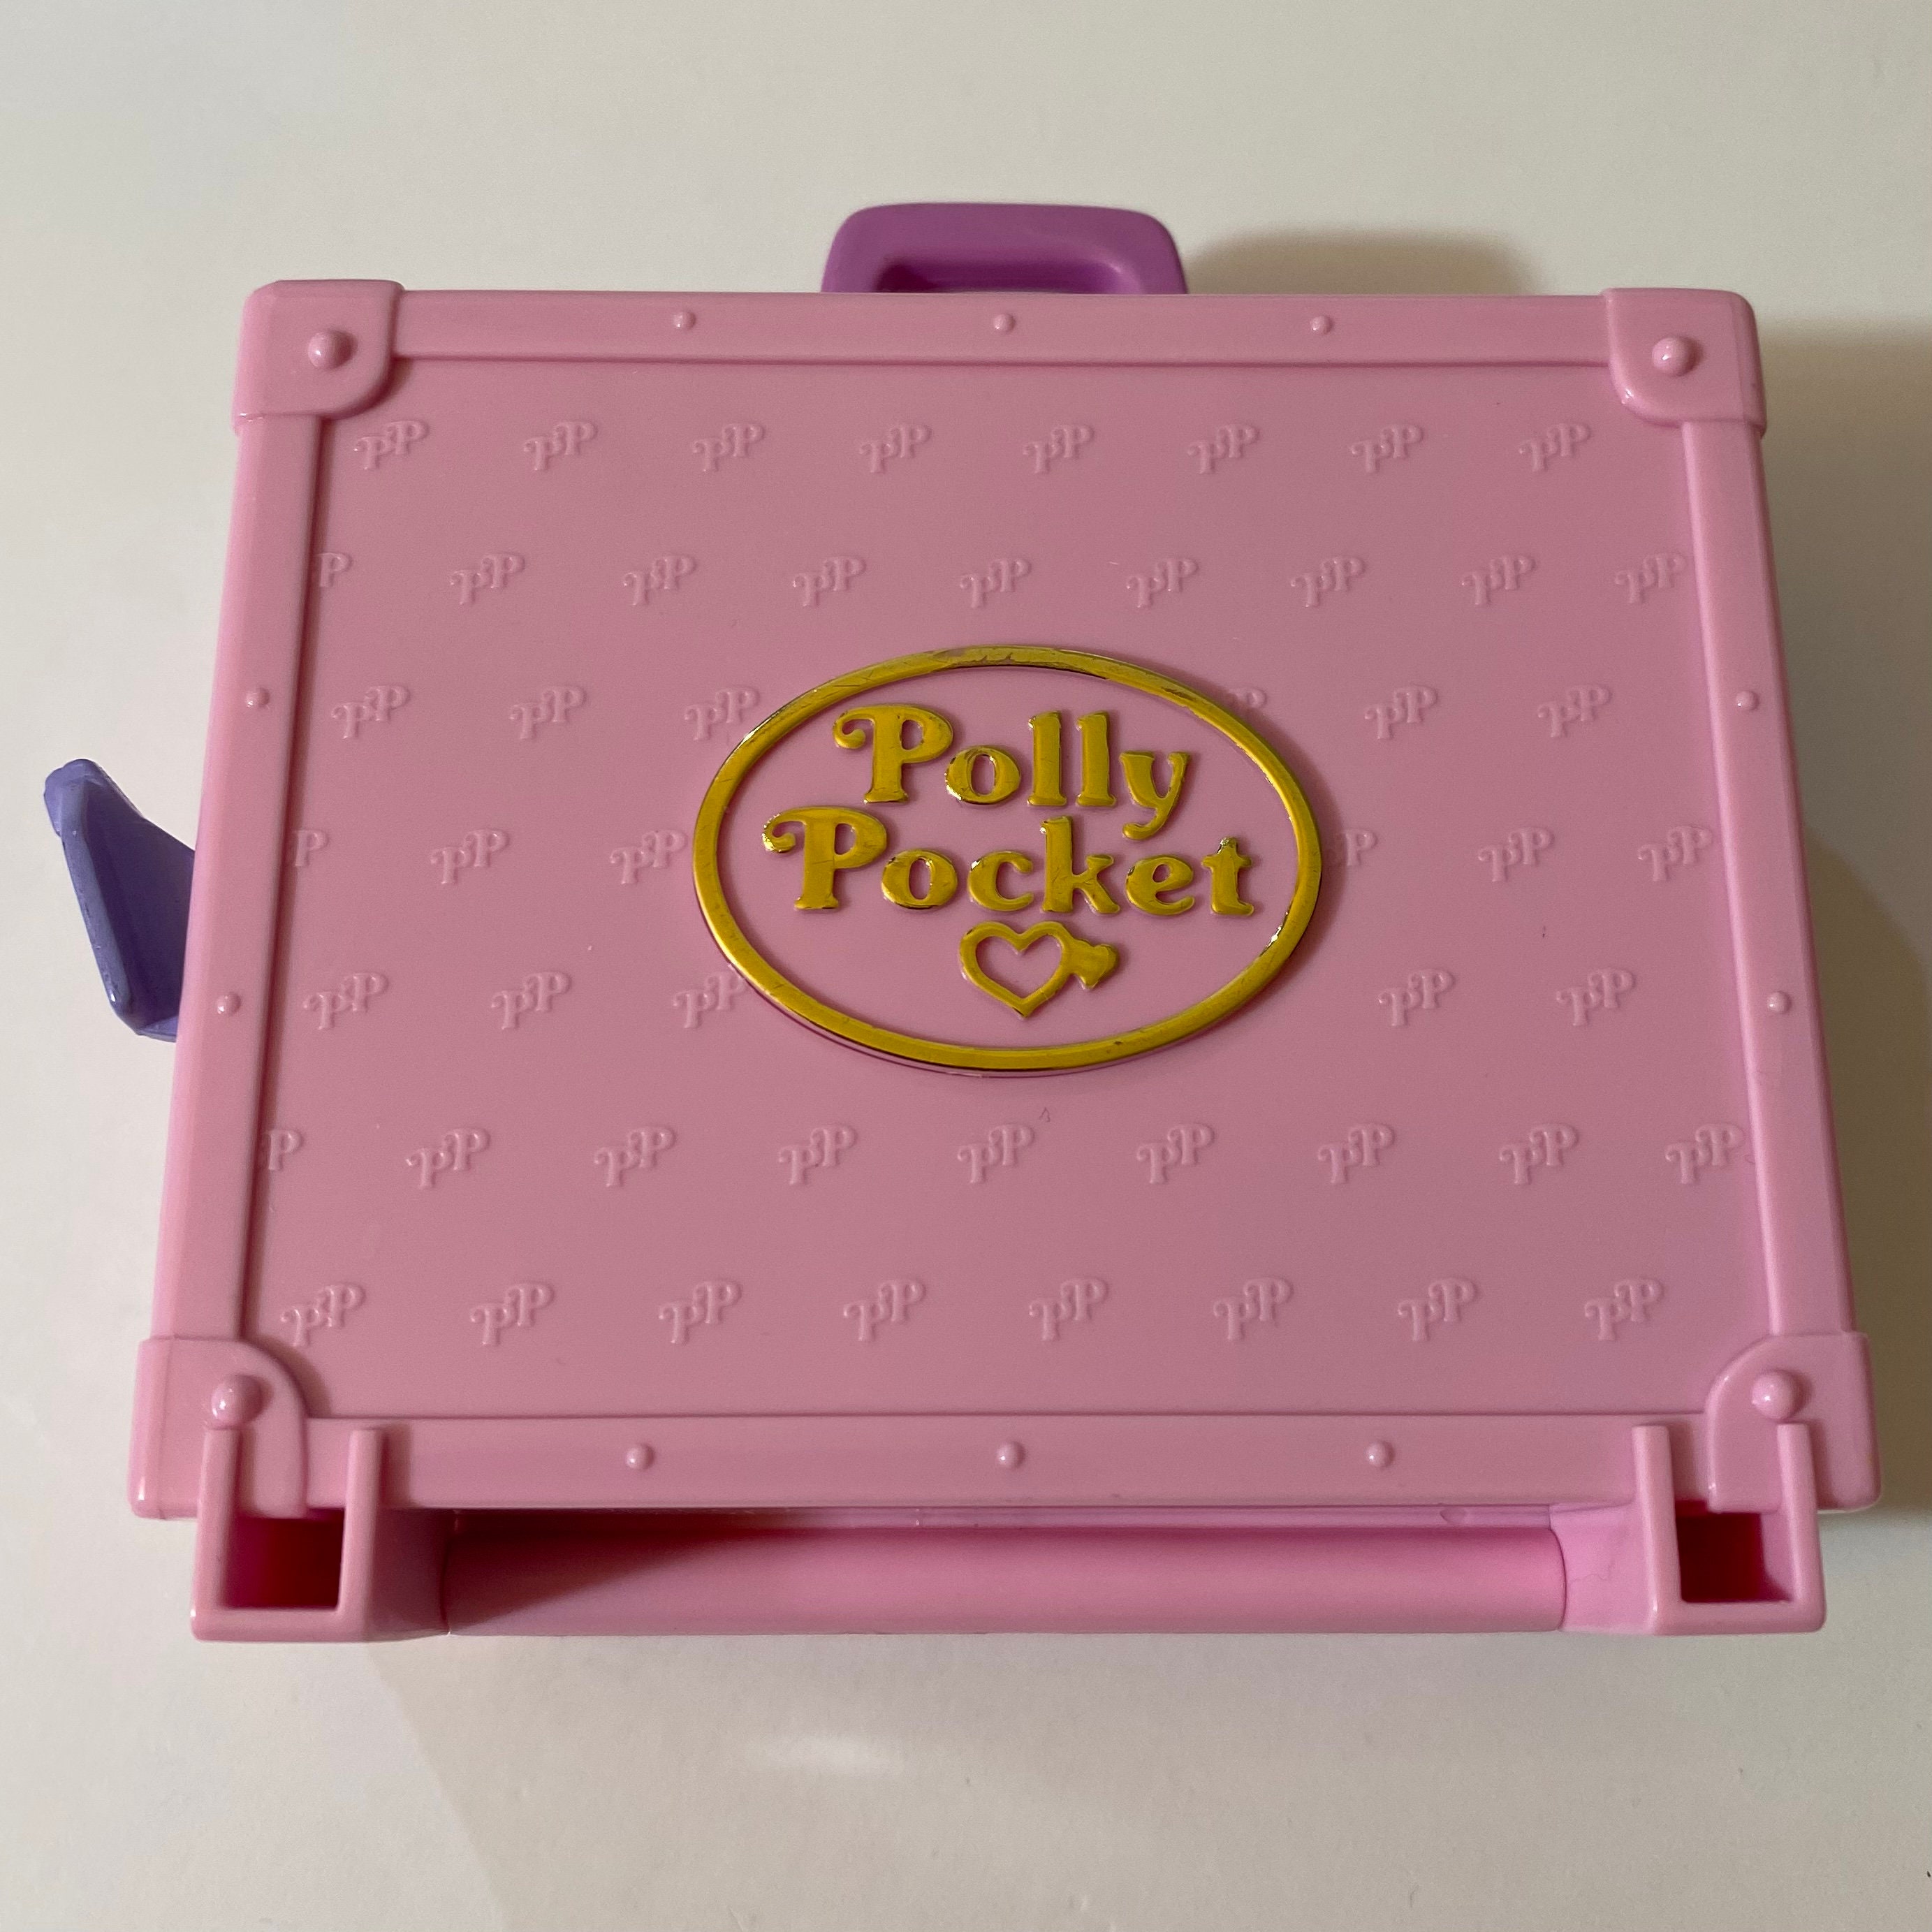 Polly pocket valise